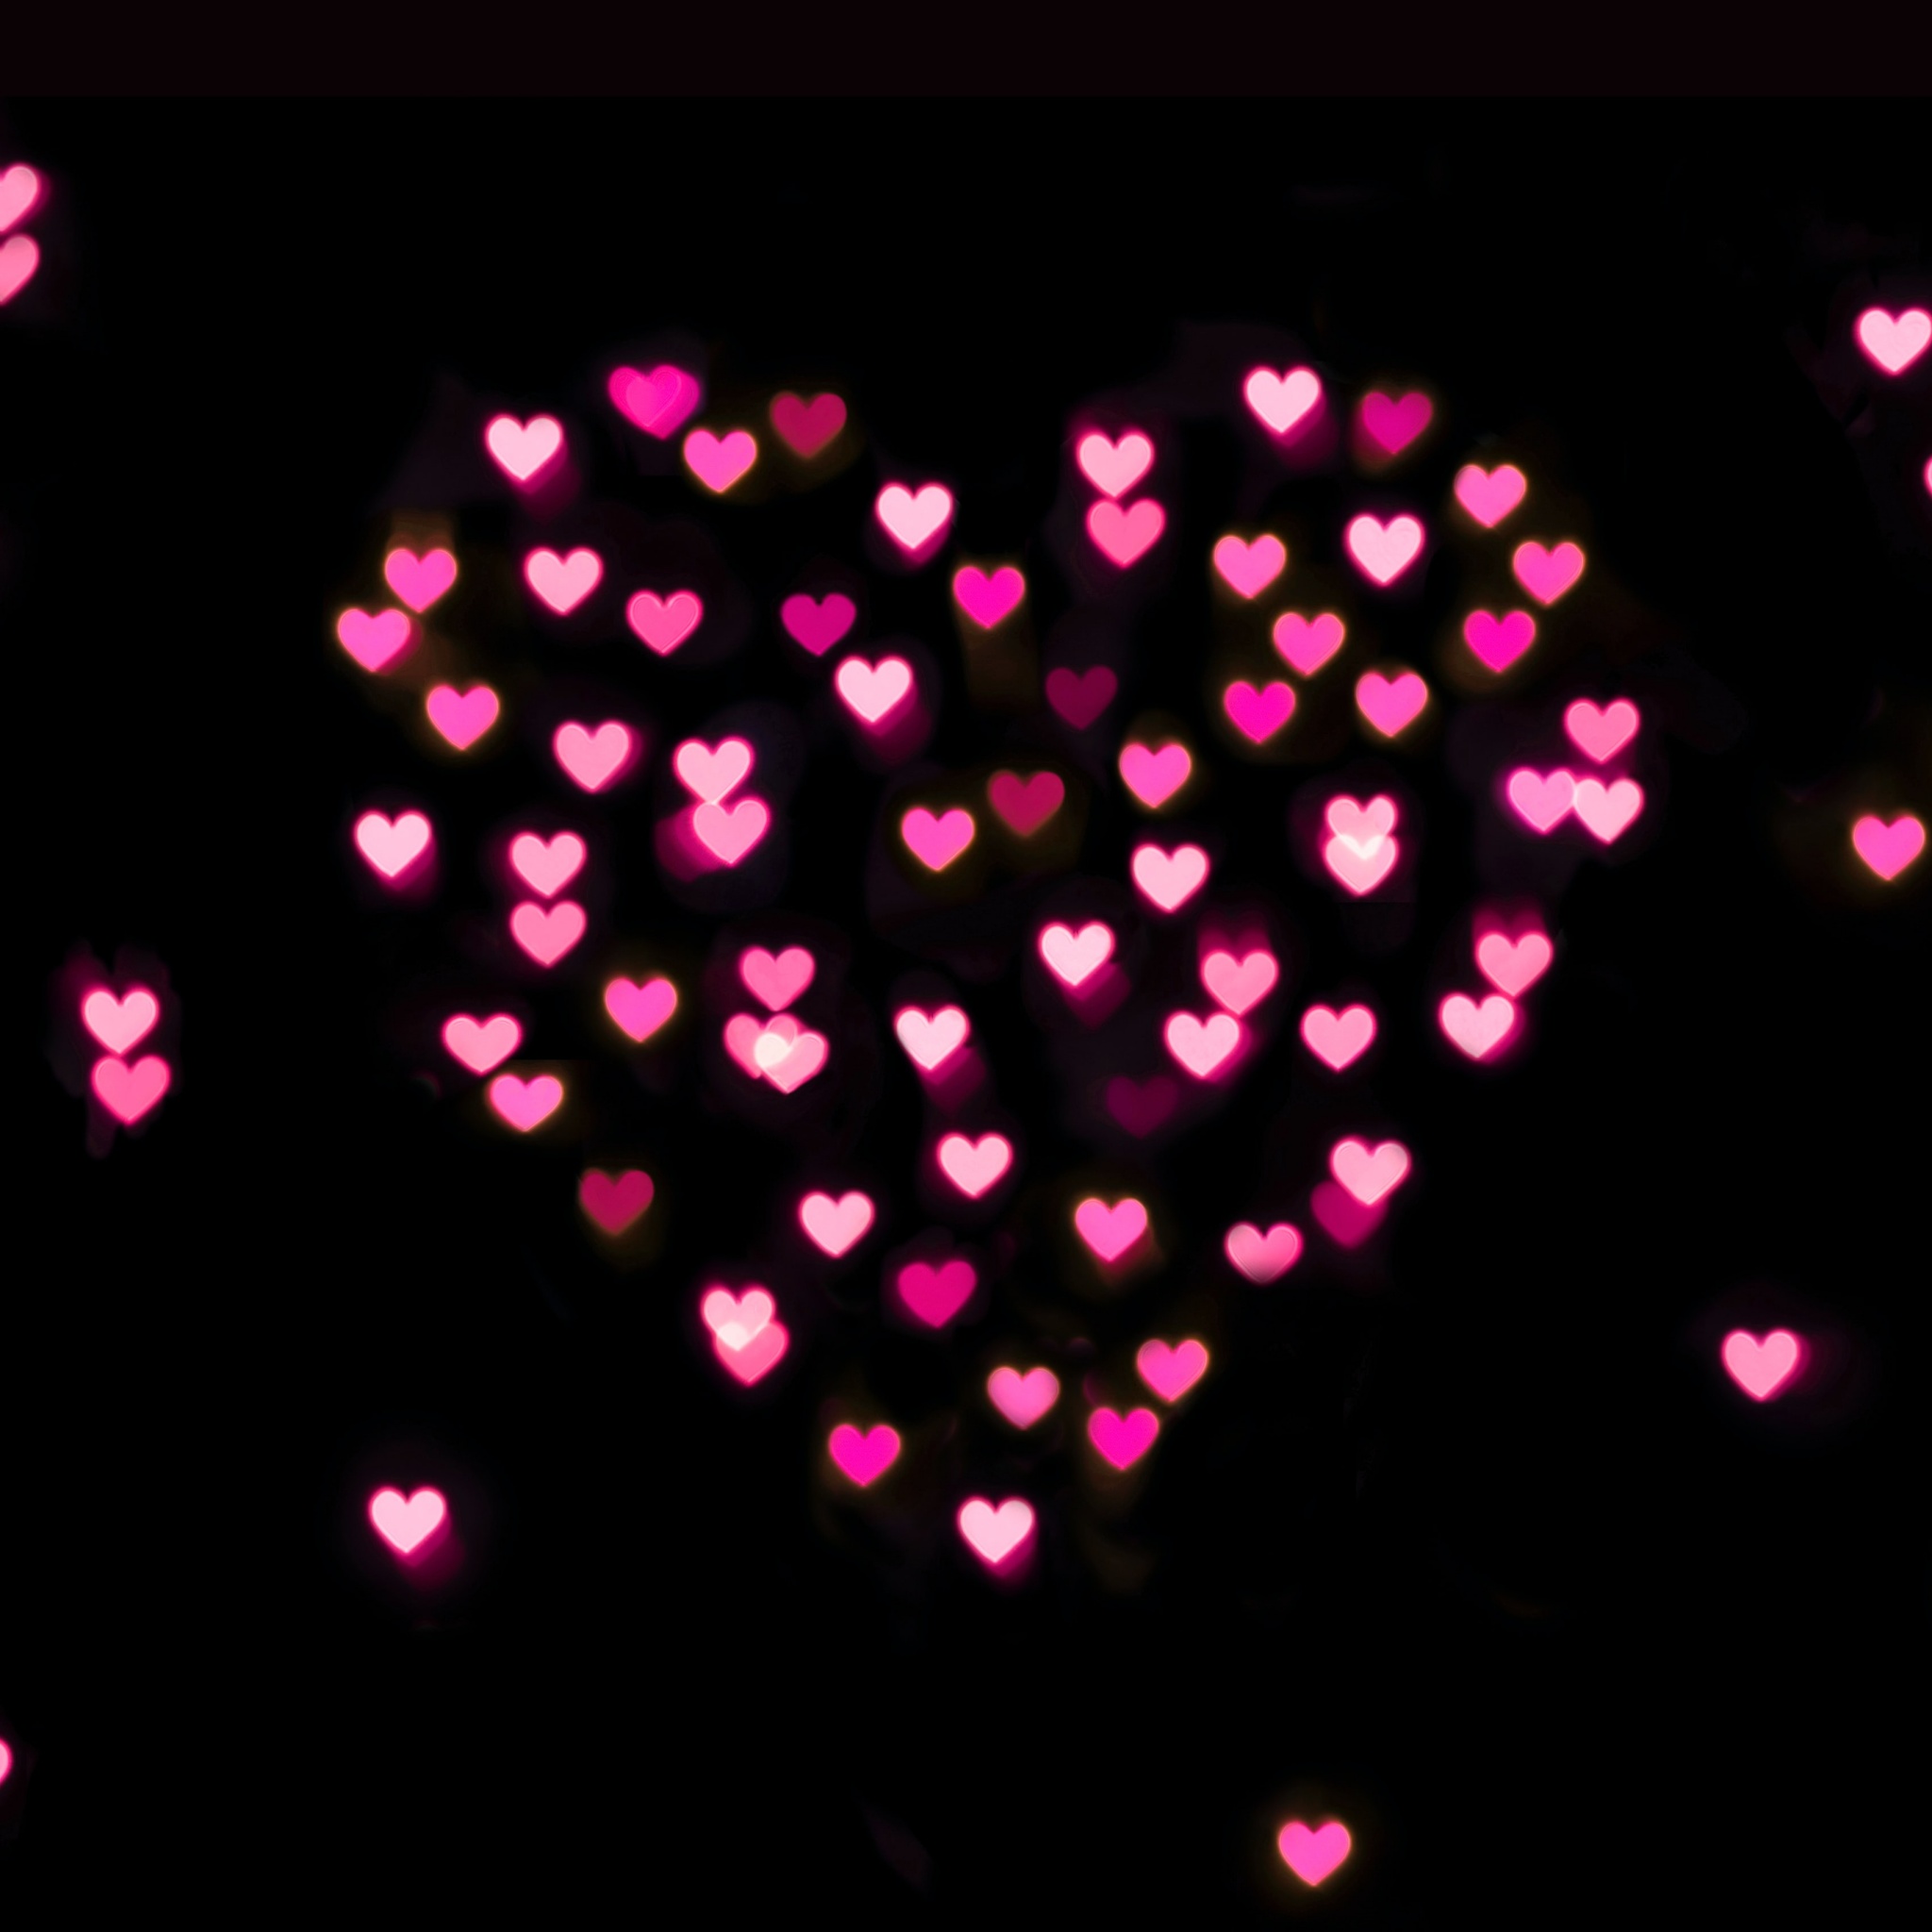 Pink hearts 4K Wallpaper, Black background, Bokeh, Glowing lights